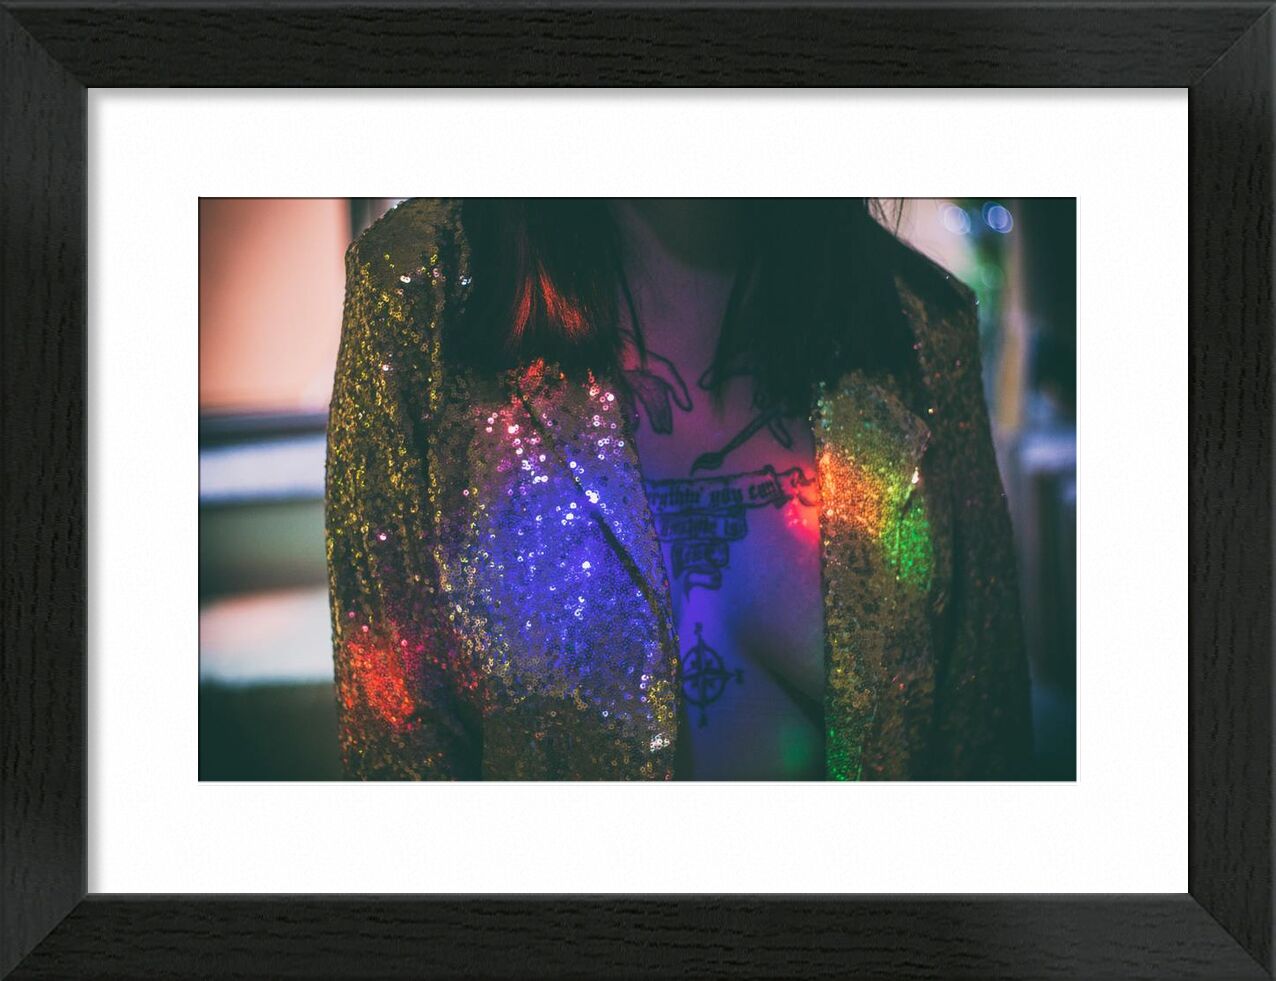 Shiny from Aliss ART, Prodi Art, tattoo, jacket, woman, sparkling, rainbow, celebration, light, glitter, glisten, festival, fashion, design, dark, color, bright, art, abstract